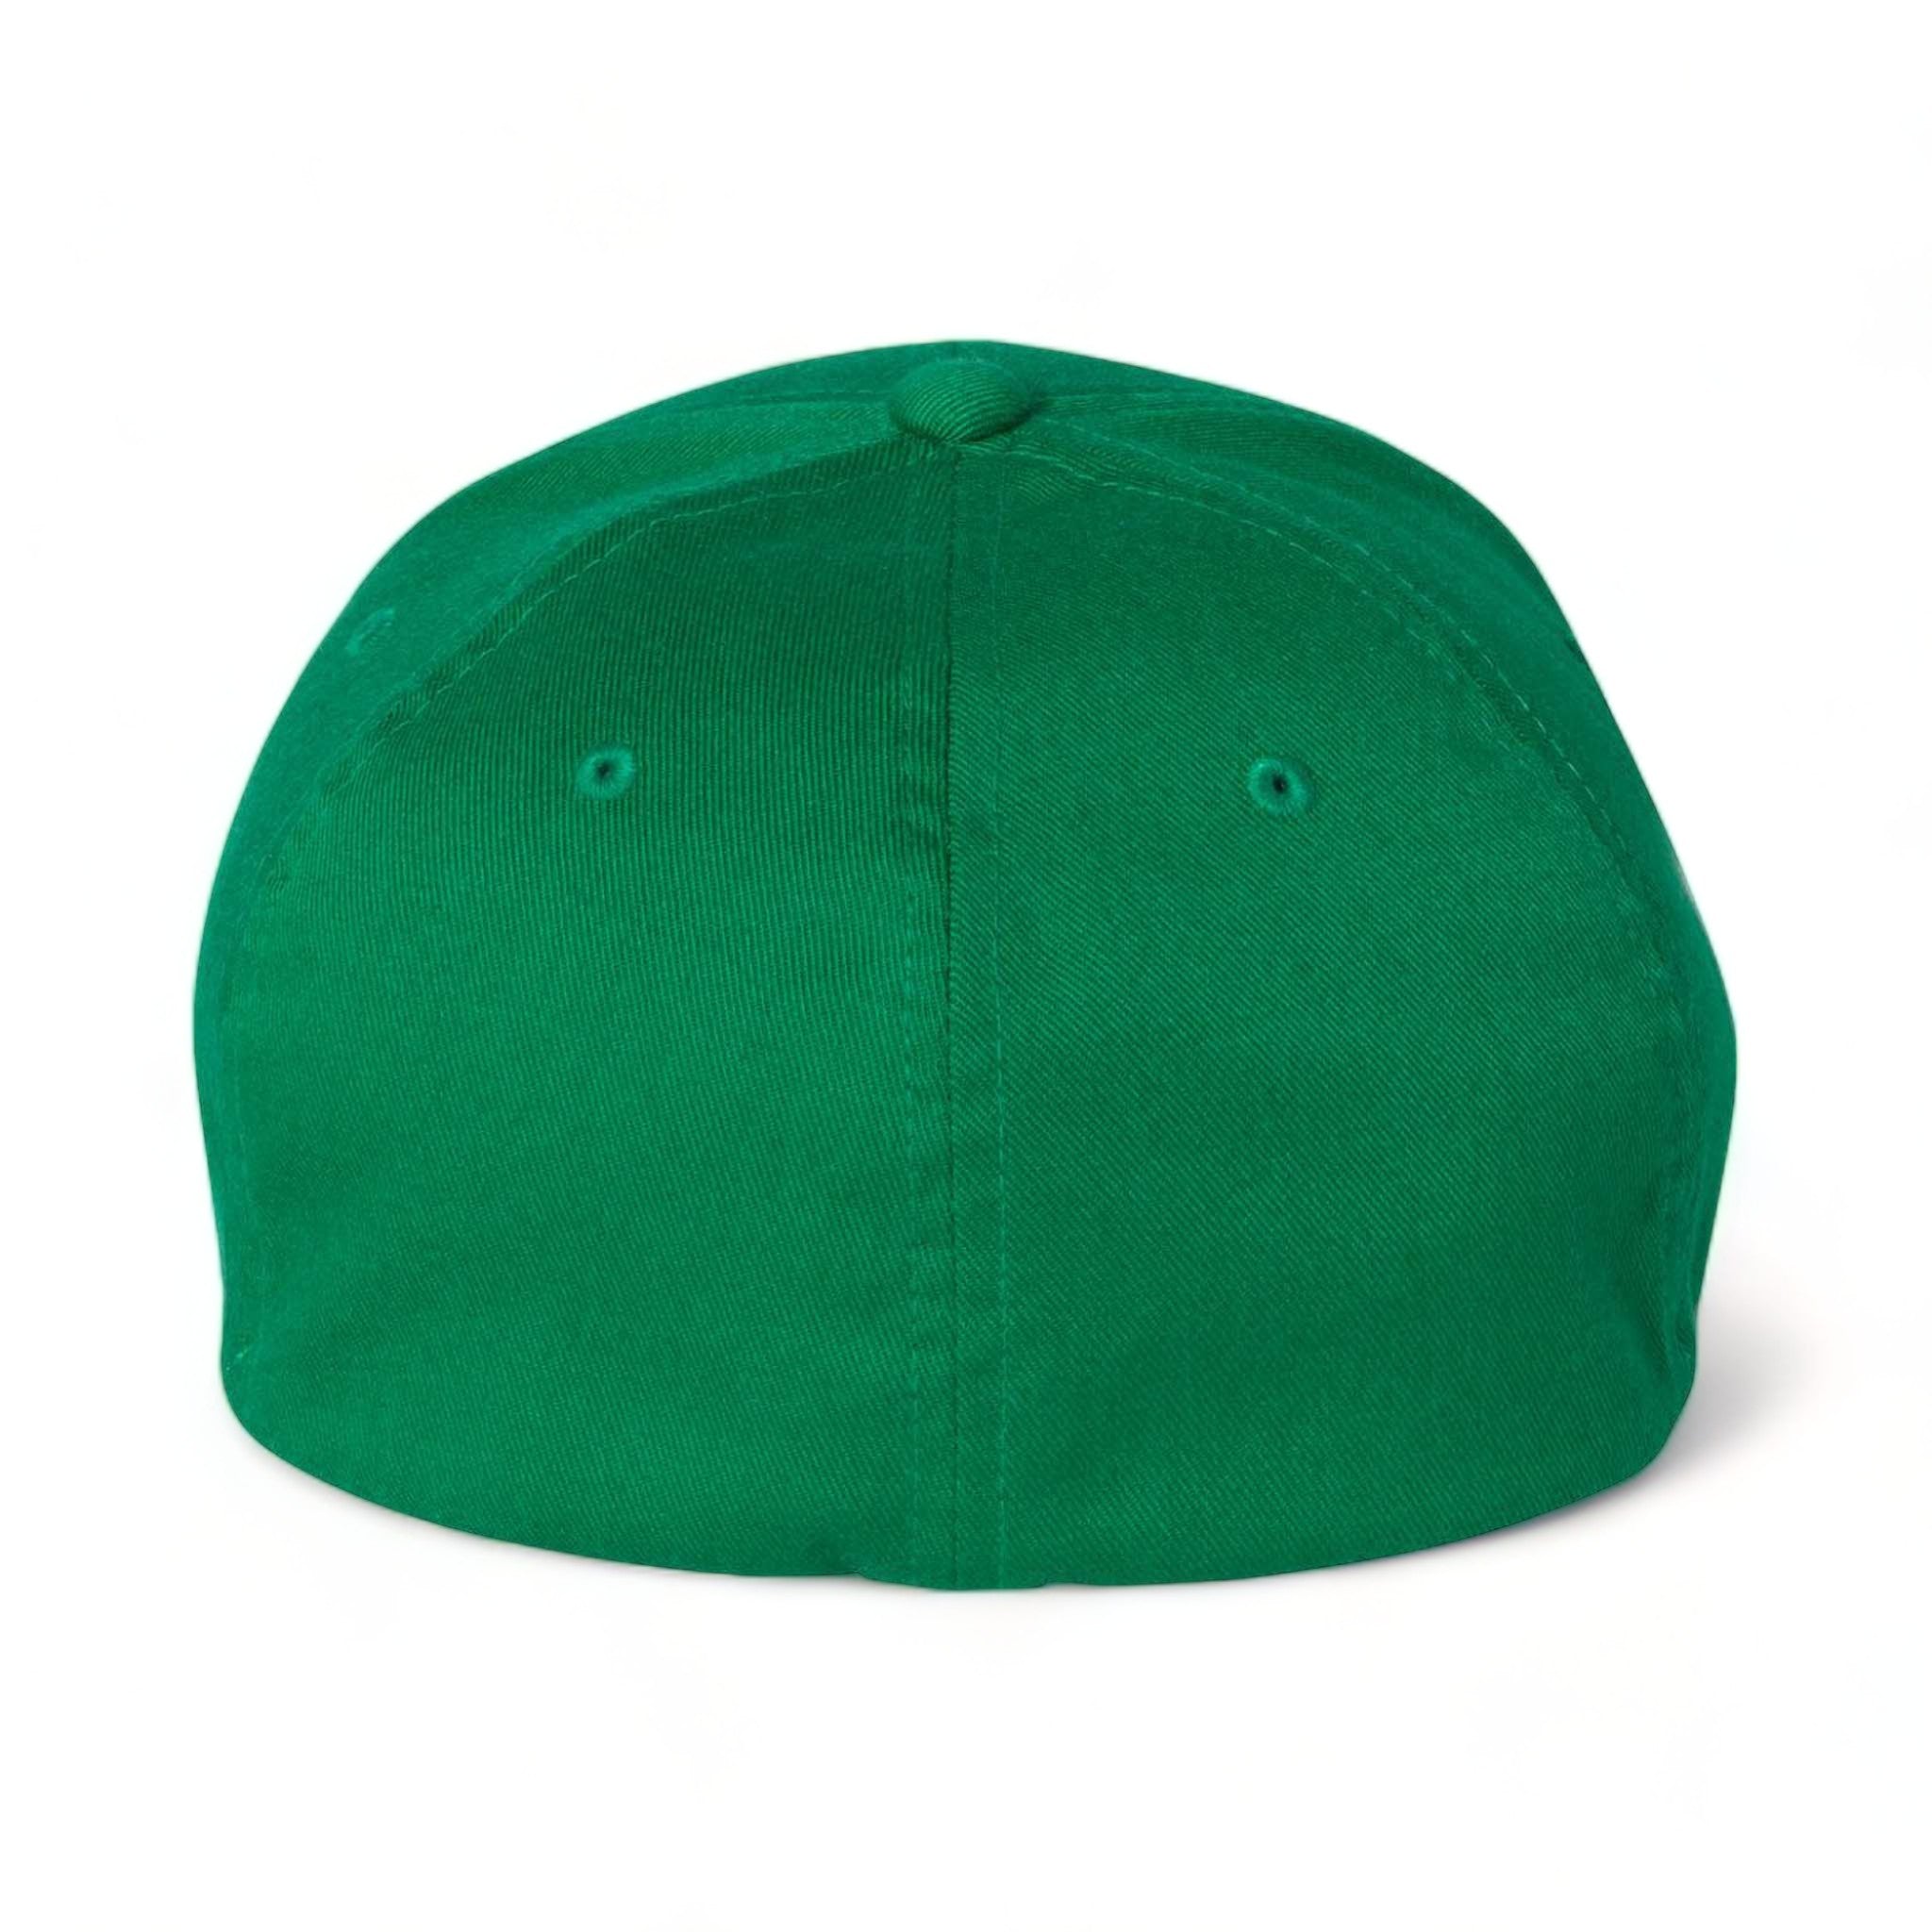 Back view of Flexfit 6277 custom hat in pepper green